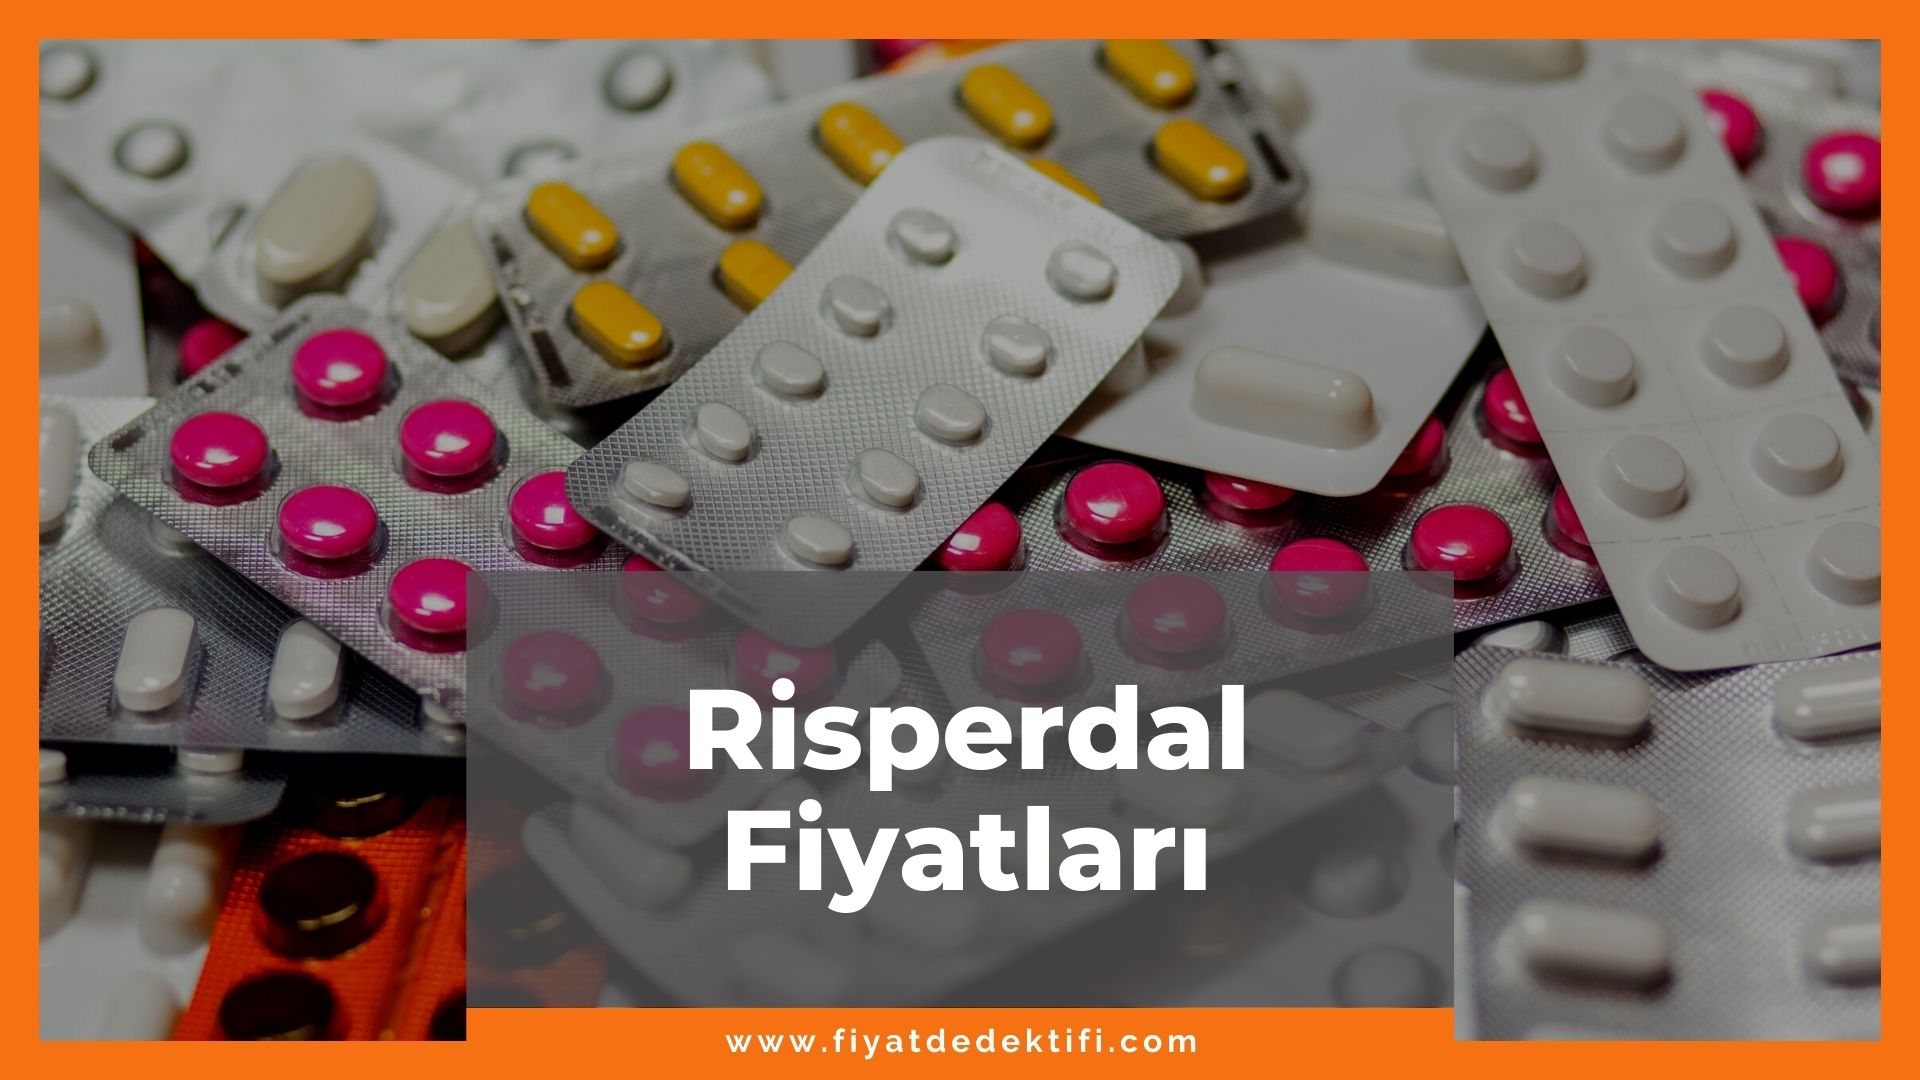 Risperdal Fiyat 2021, Risperdal 1 mg 2 mg 4 mg Consta Fiyatı, risperdal zamlandı mı, risperdal zamlı fiyatı ne kadar kaç tl oldu